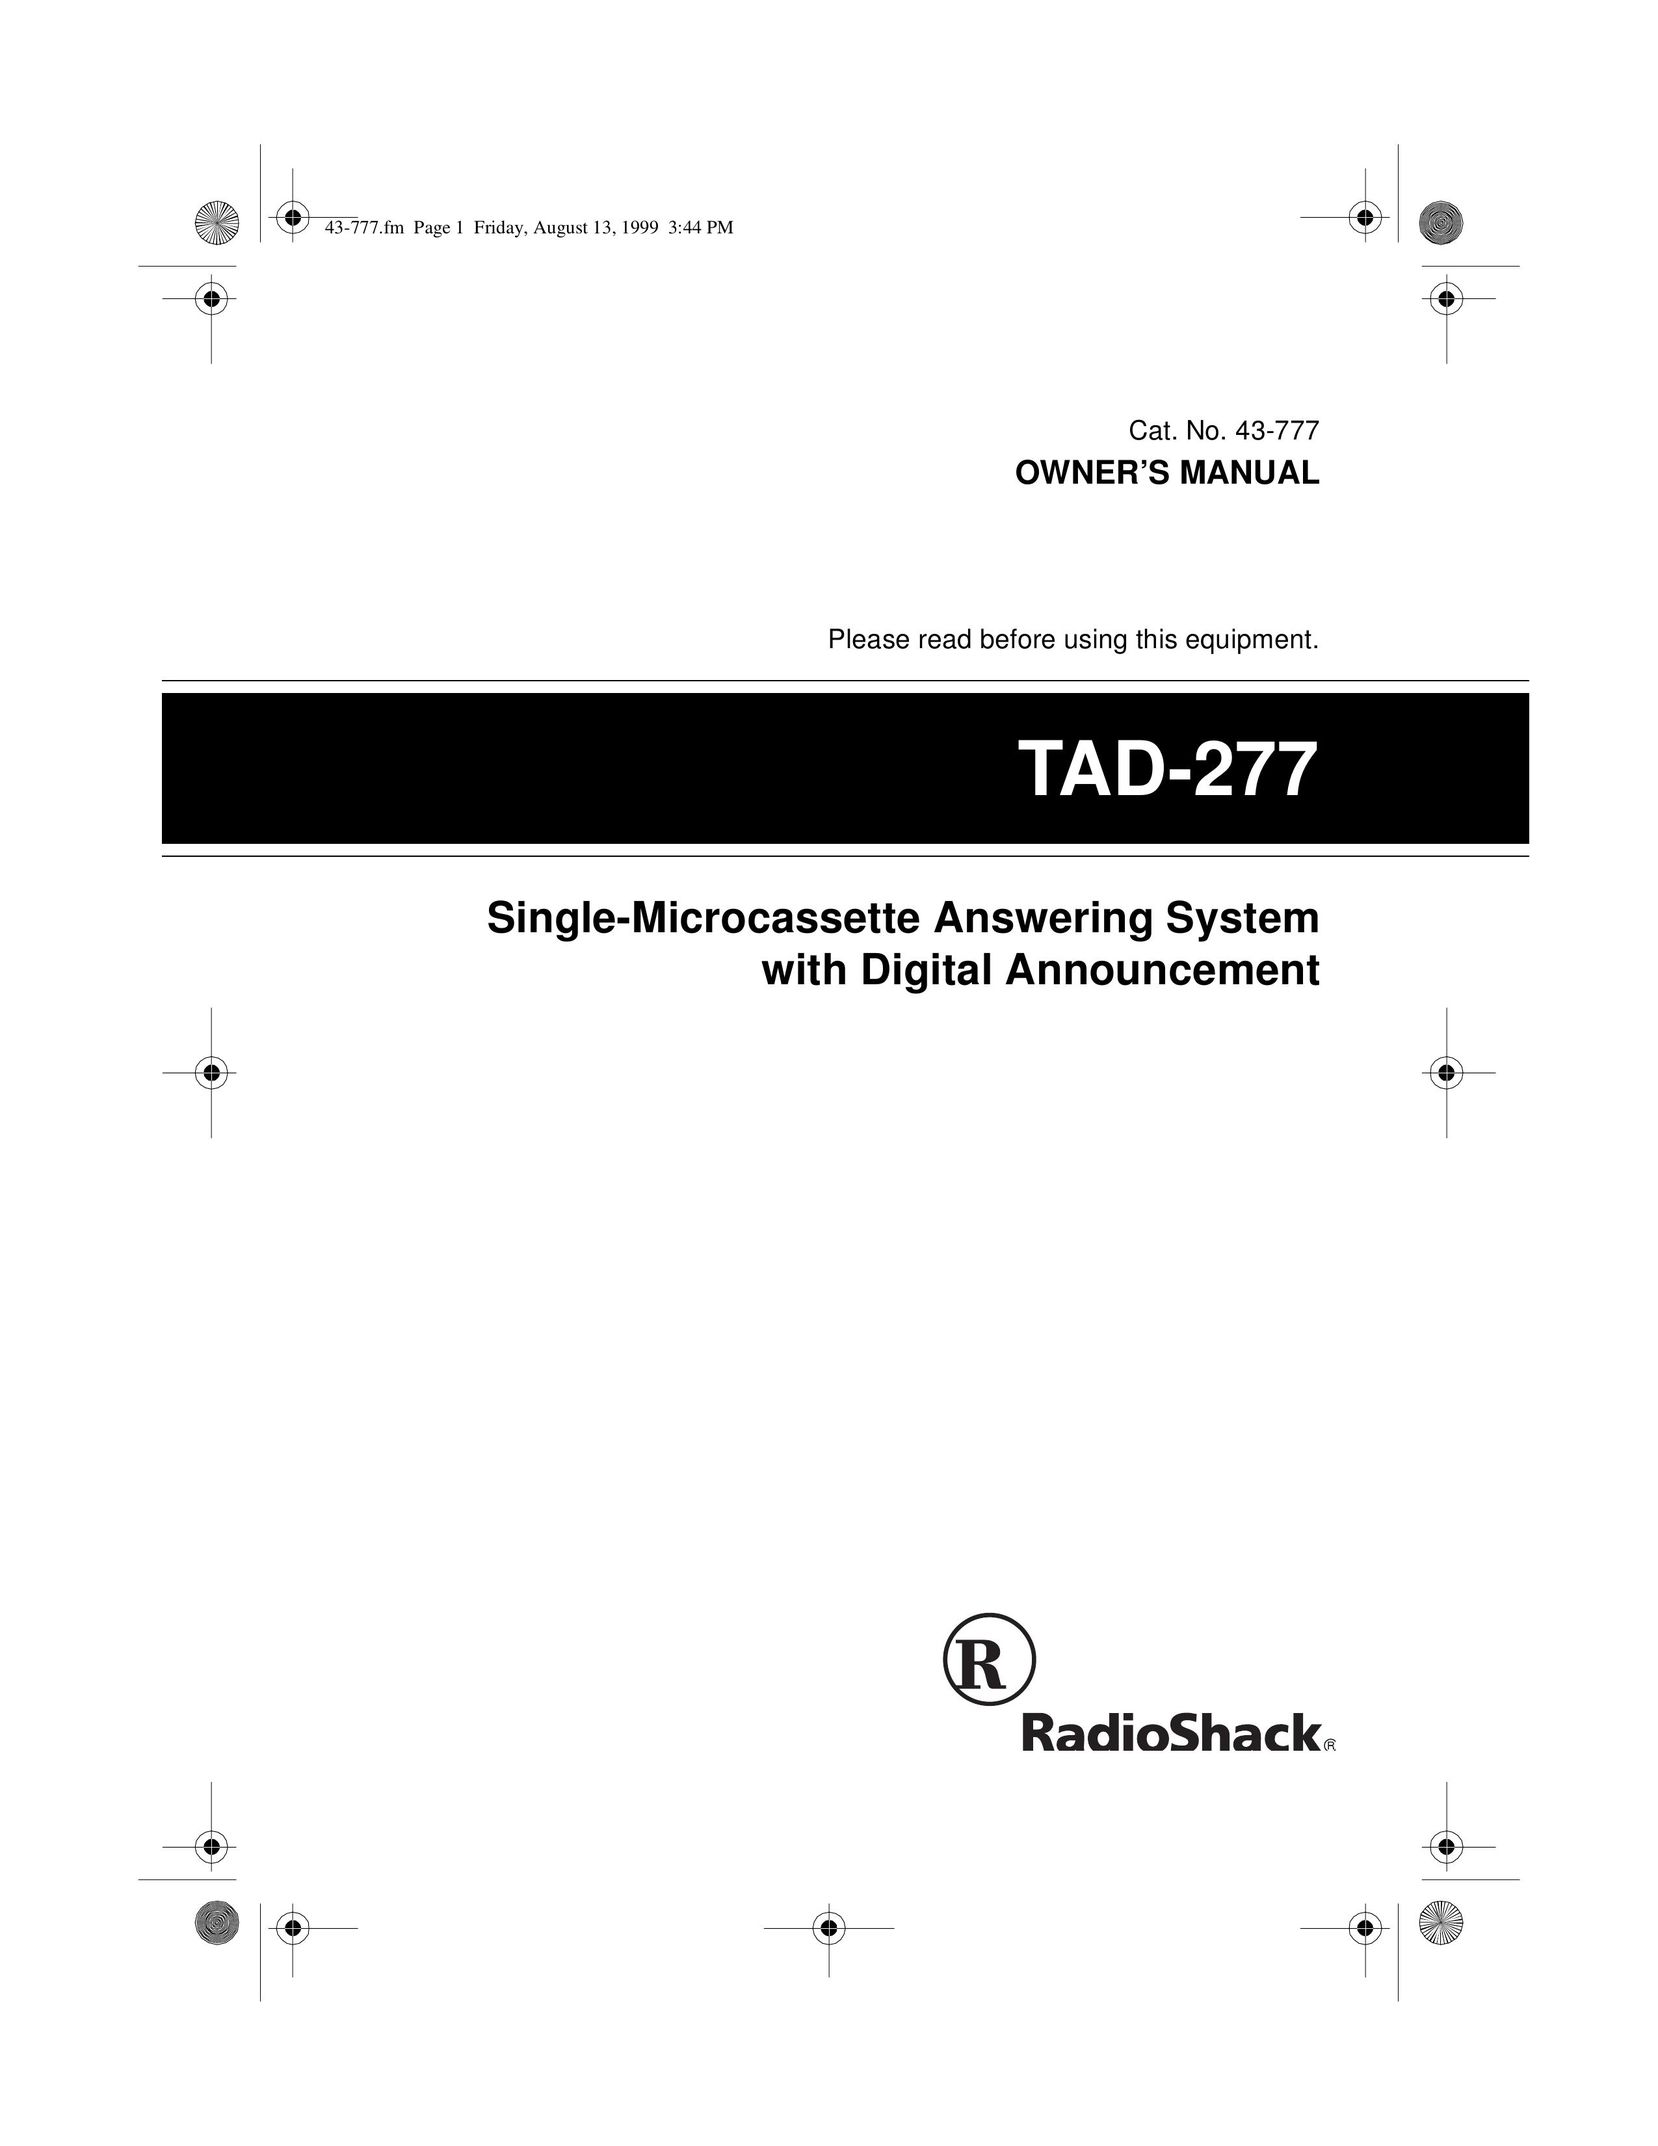 Radio Shack TAD-277 Answering Machine User Manual